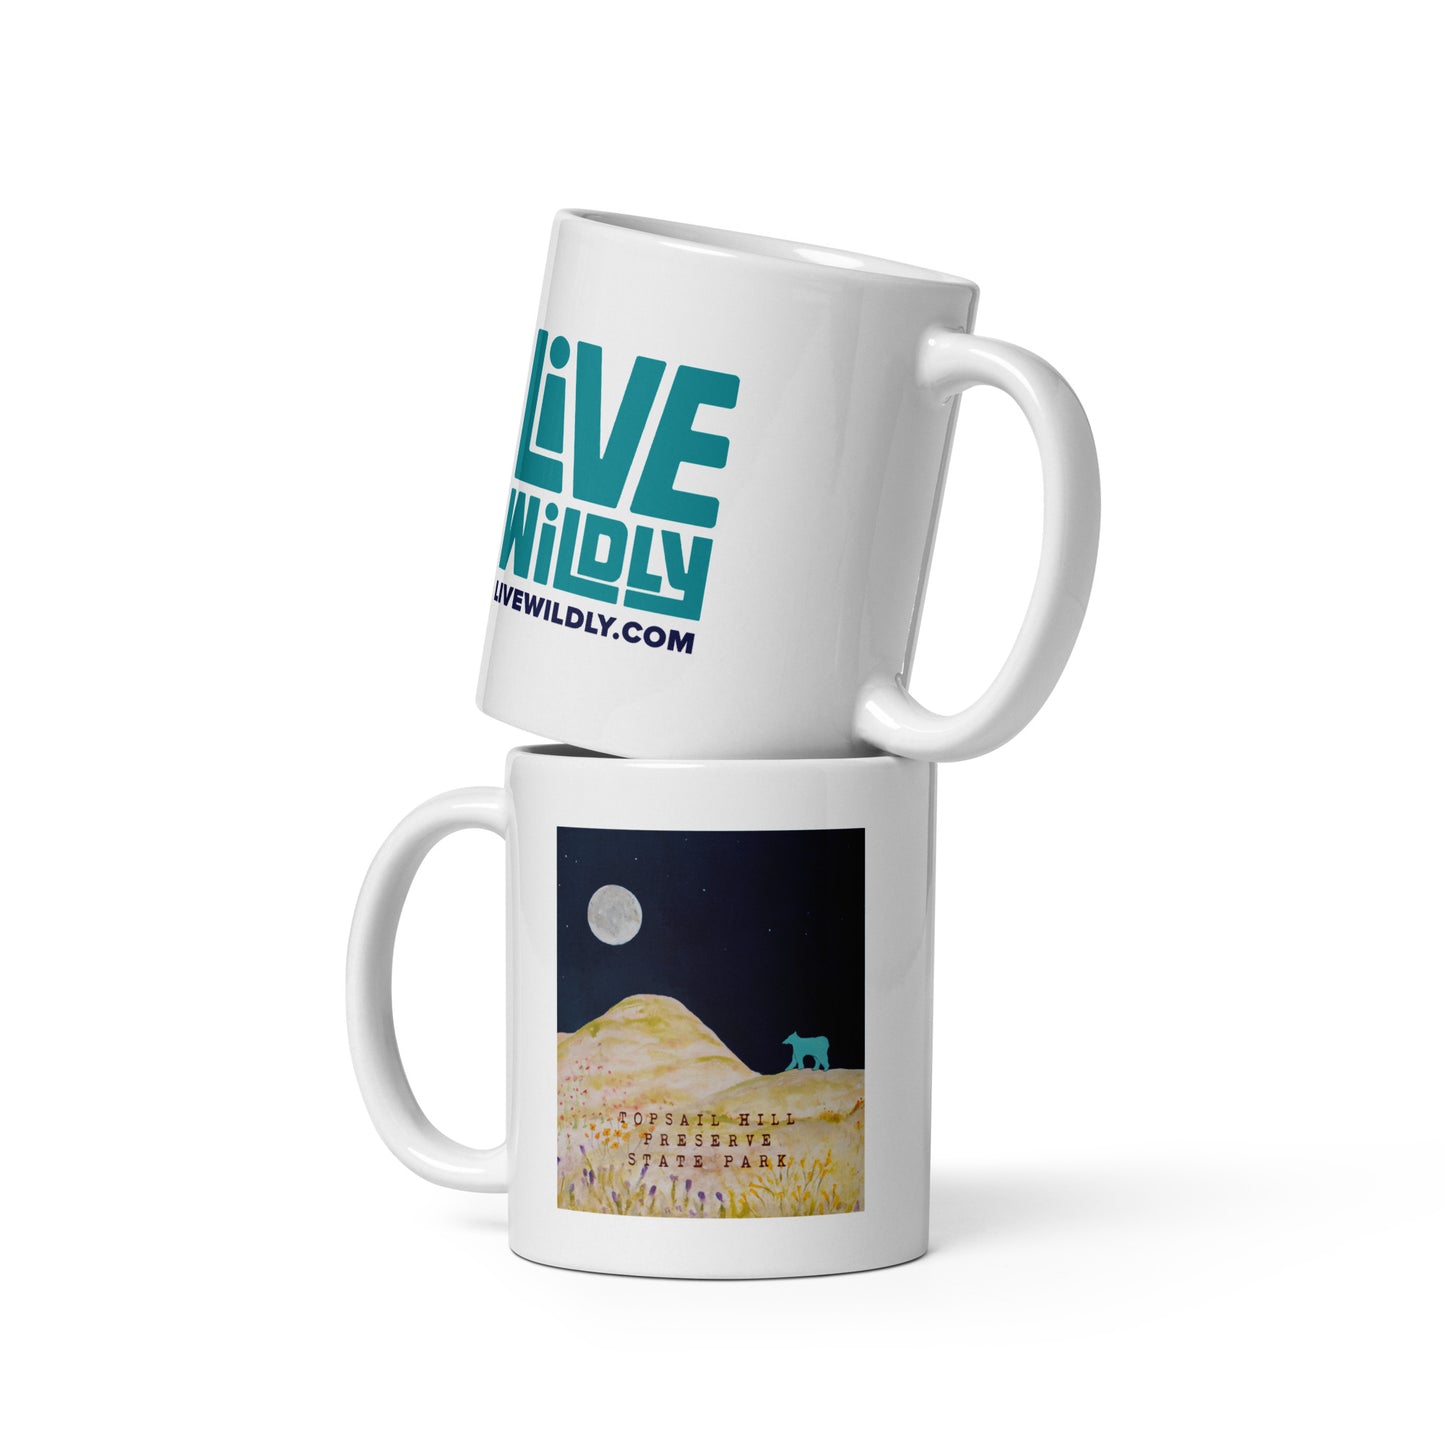 Topsail Hill Preserve Mug by Deborah Mitchell - Live Wildly 